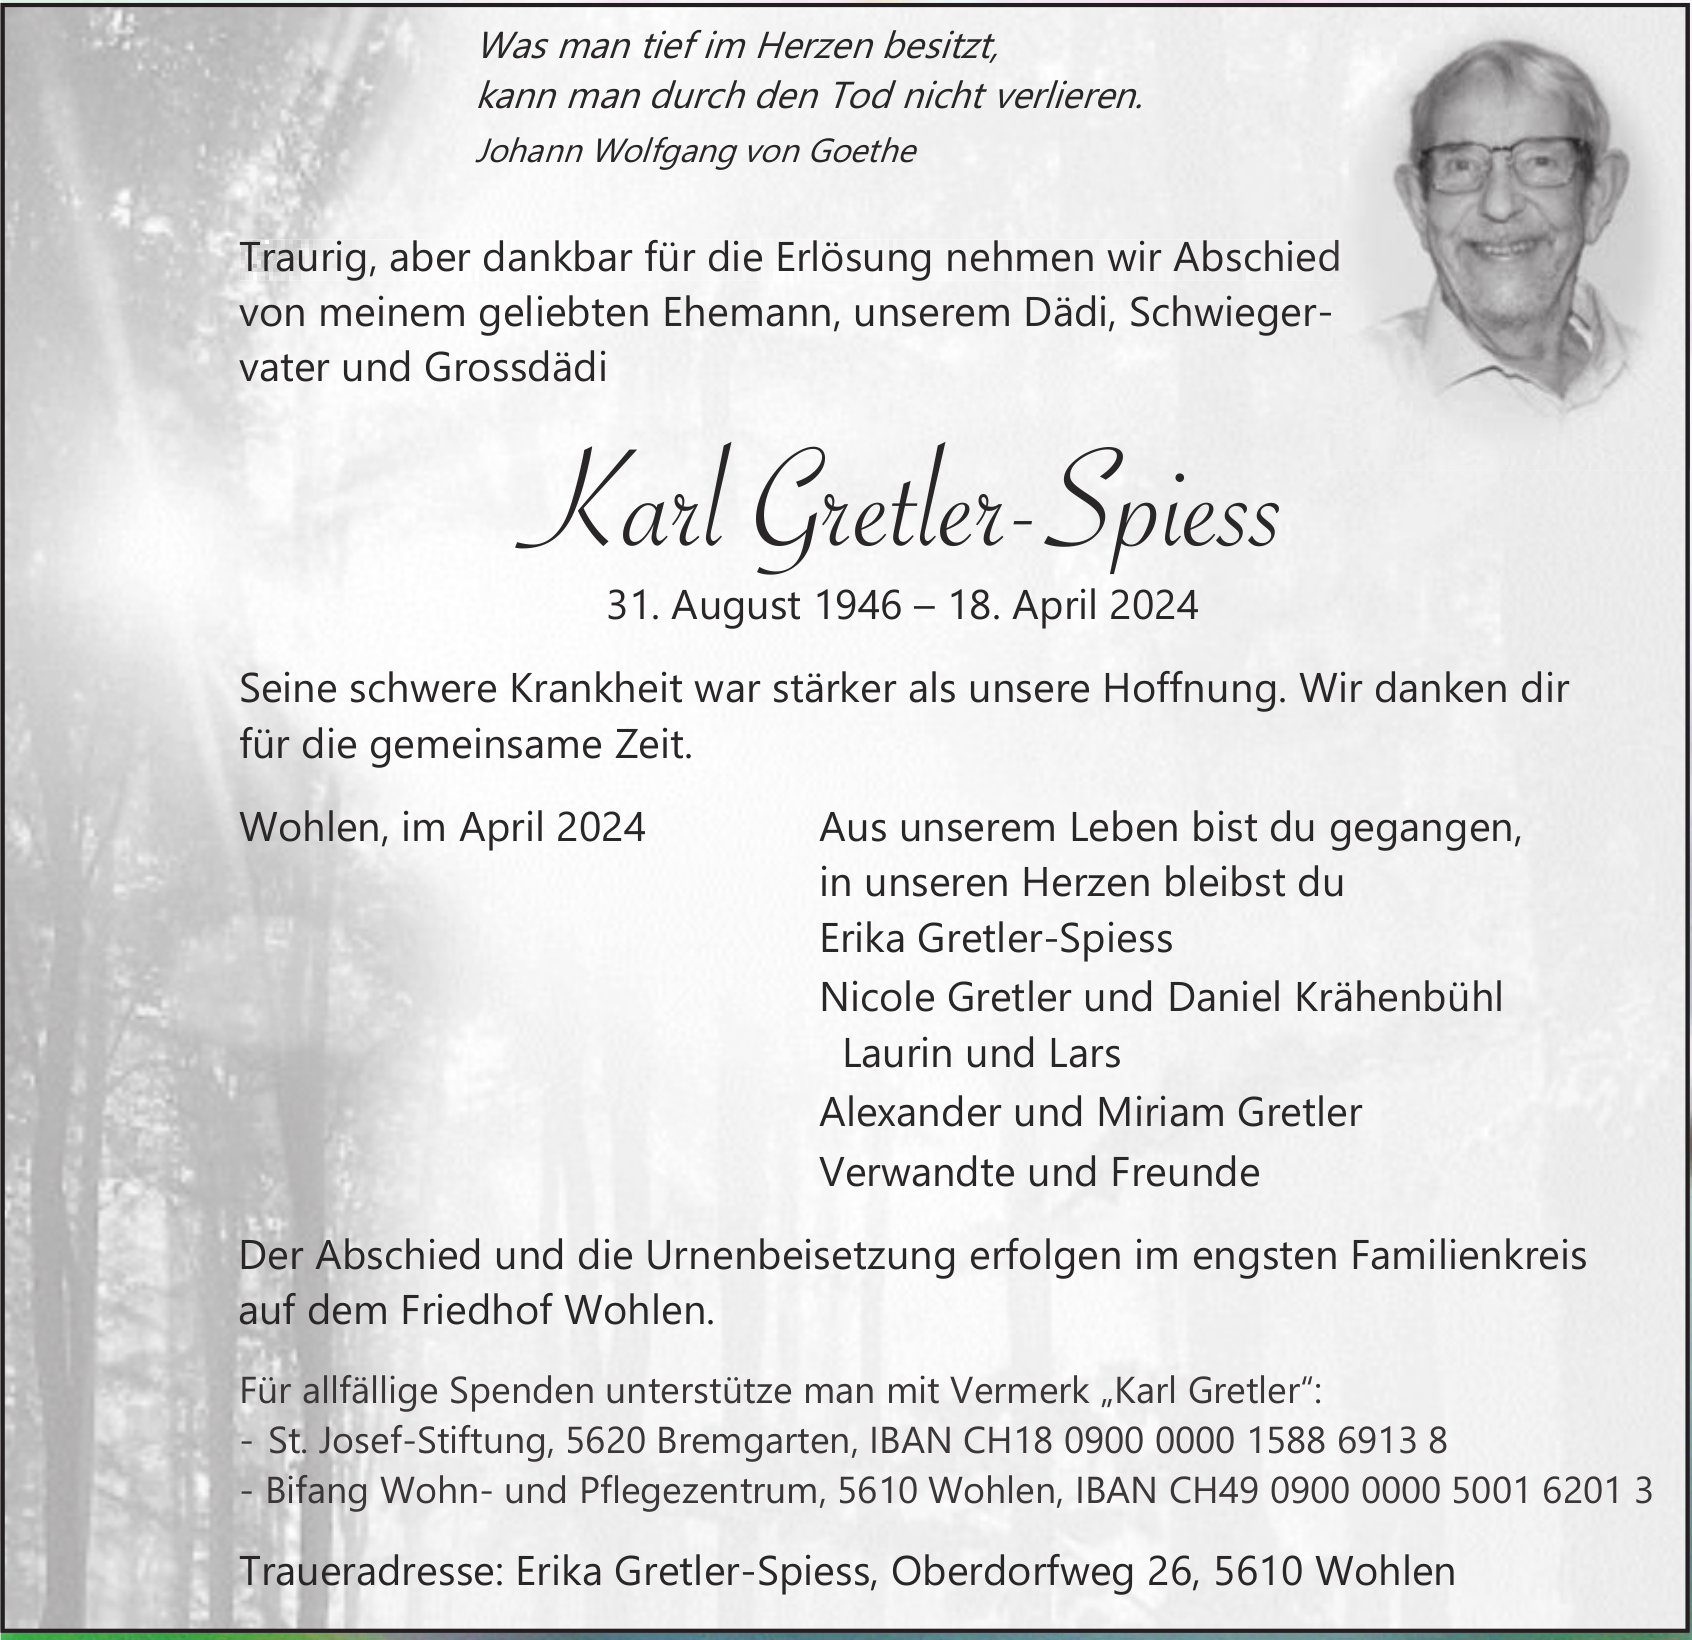 Karl Gretler-Spiess, April 2024 / TA